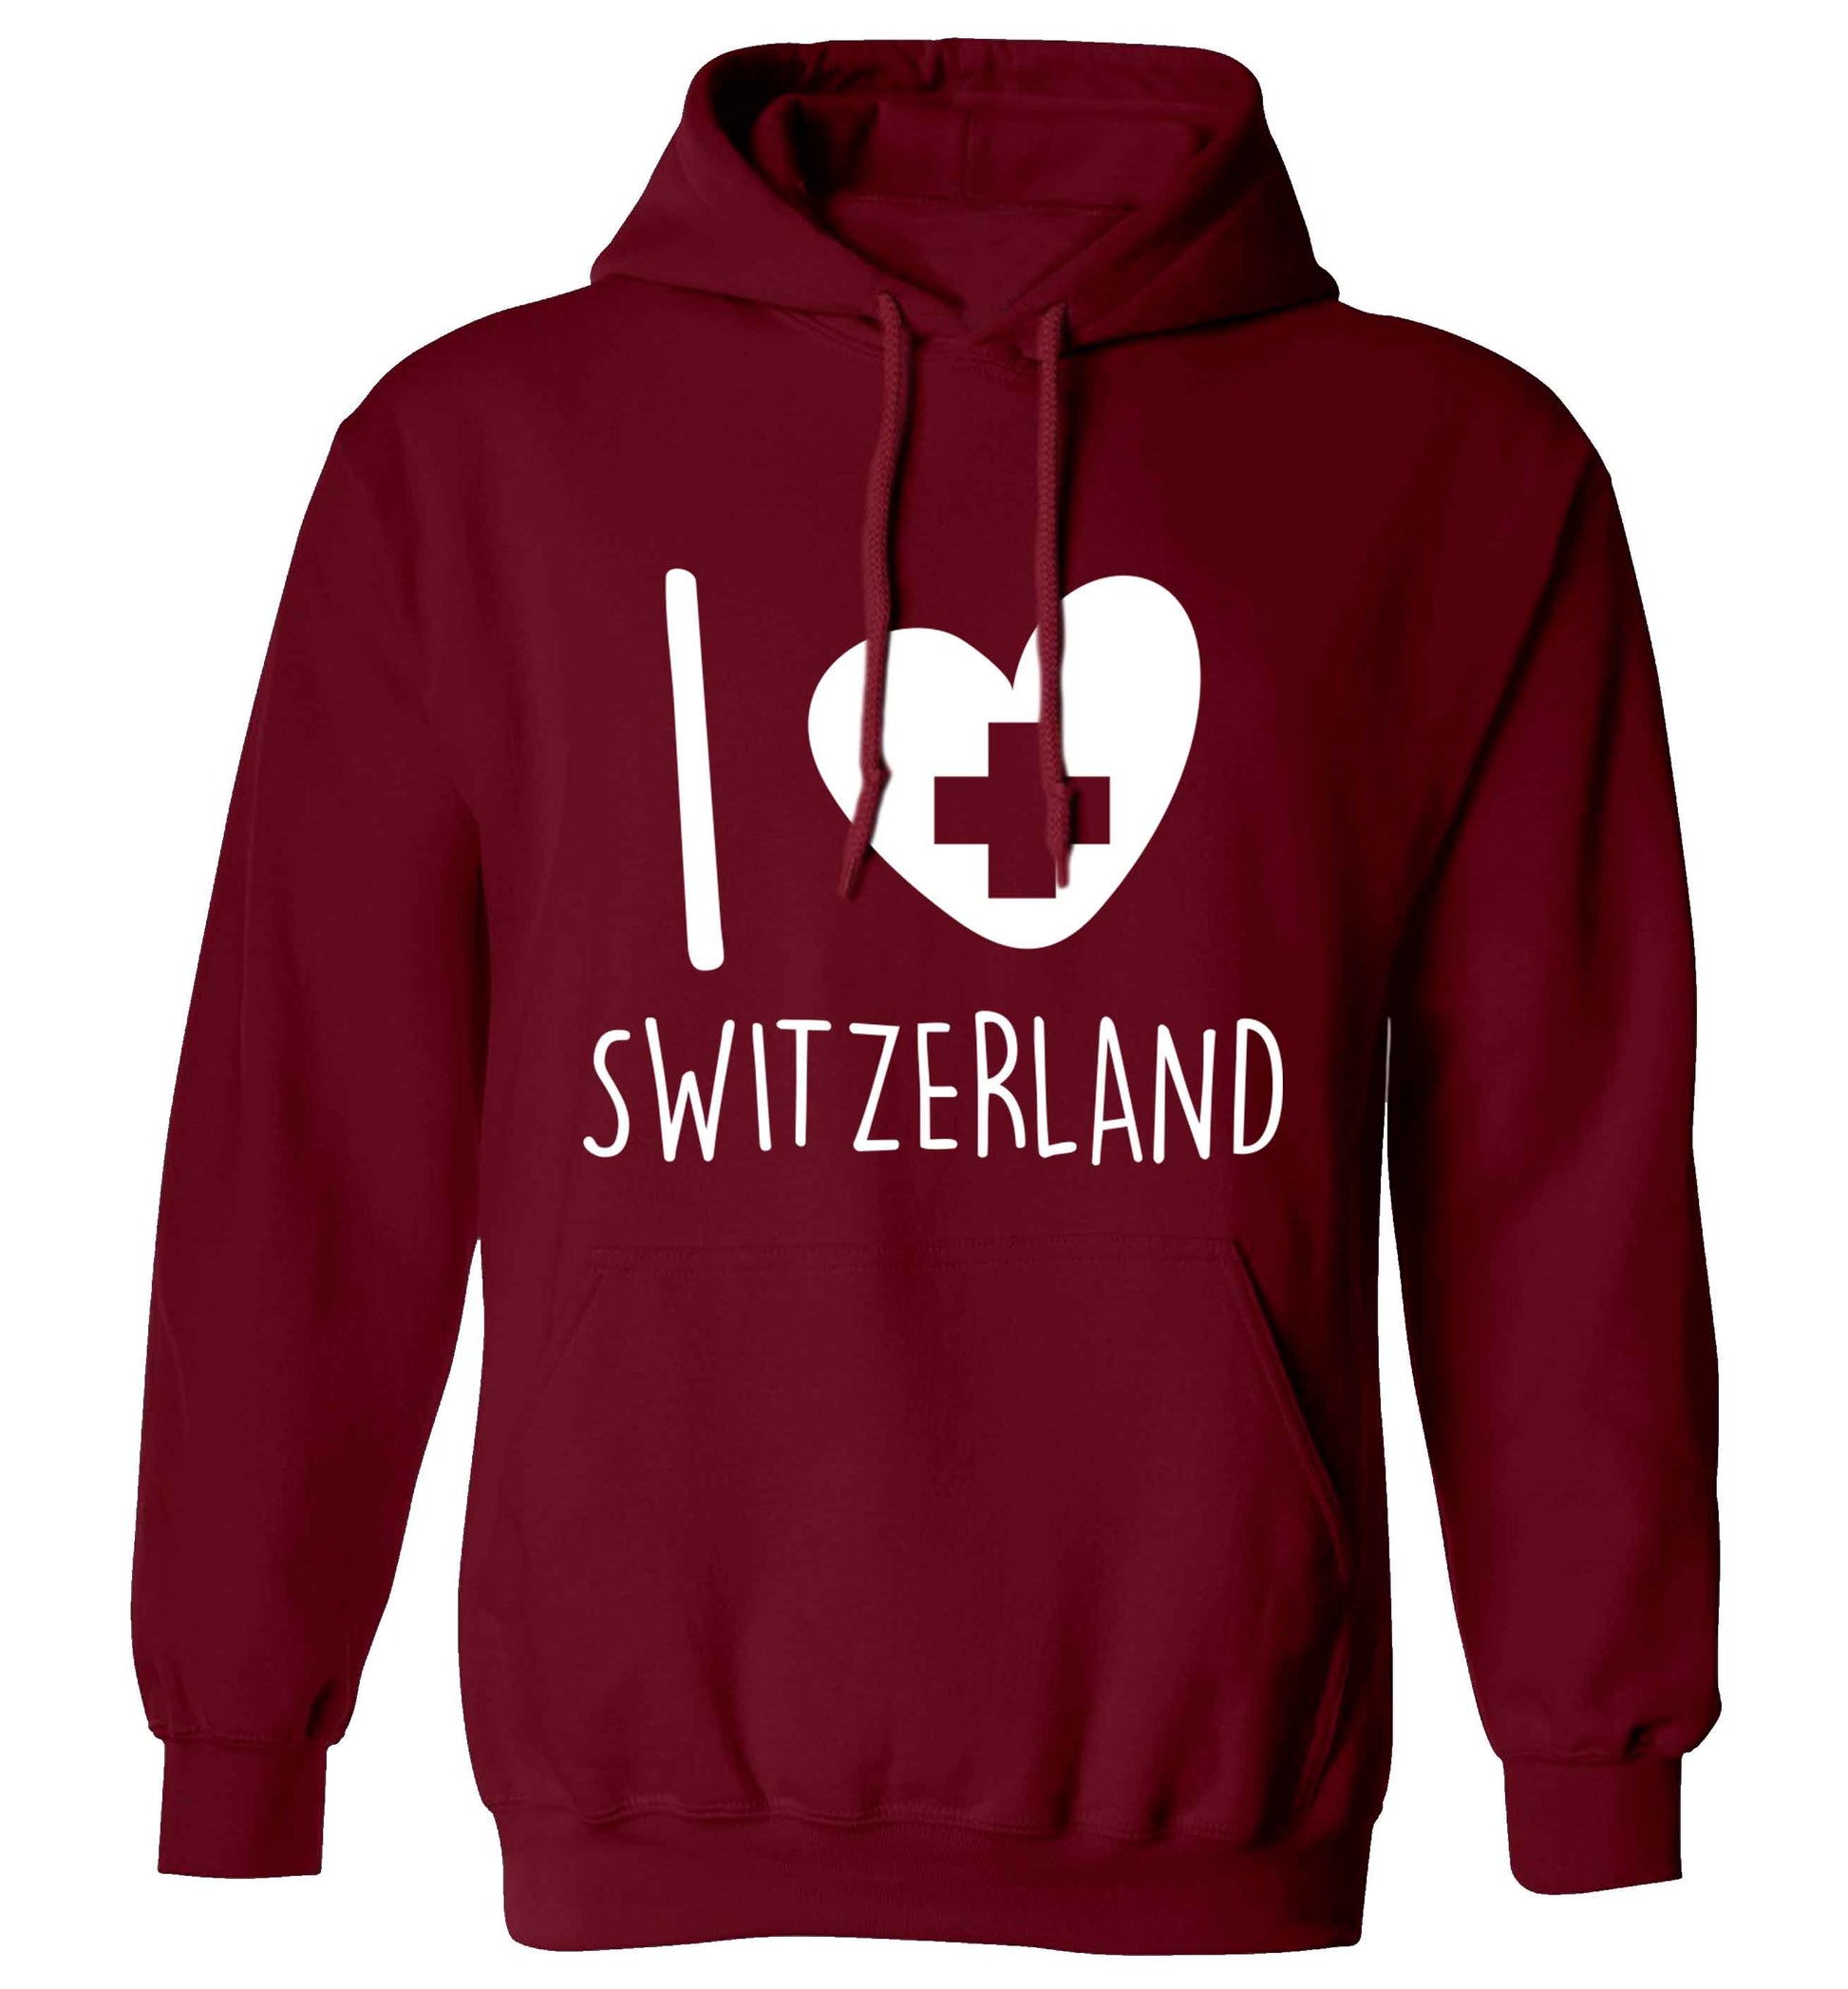 I love switzerland adults unisex maroon hoodie 2XL